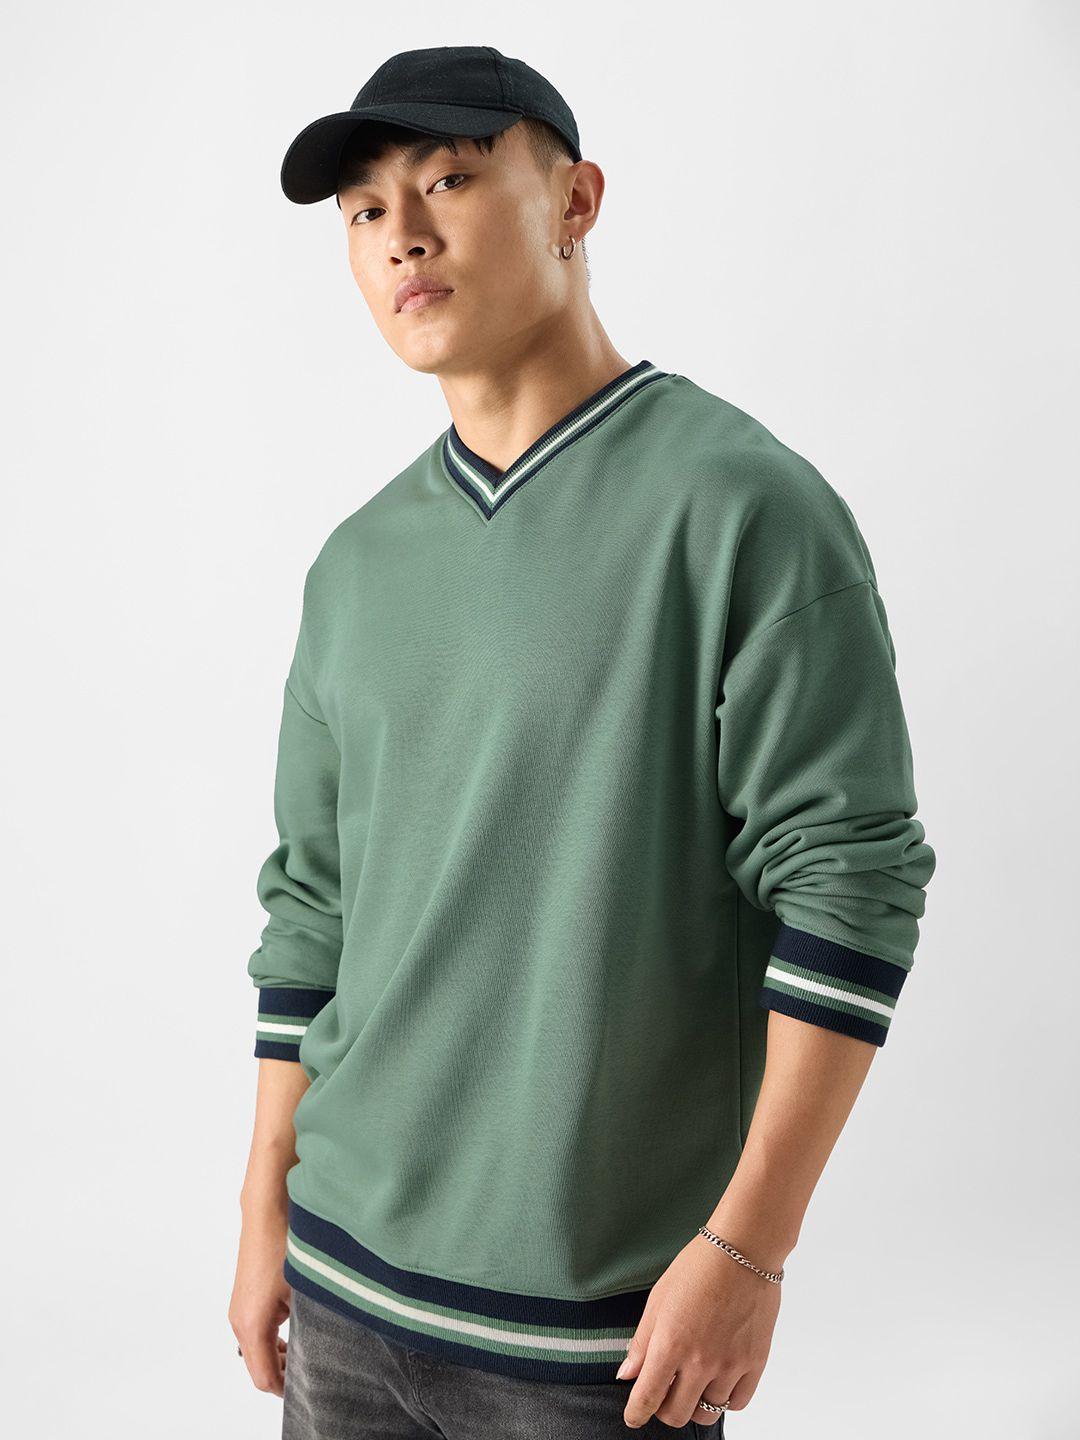 The Souled Store Green V-Neck Sweatshirt